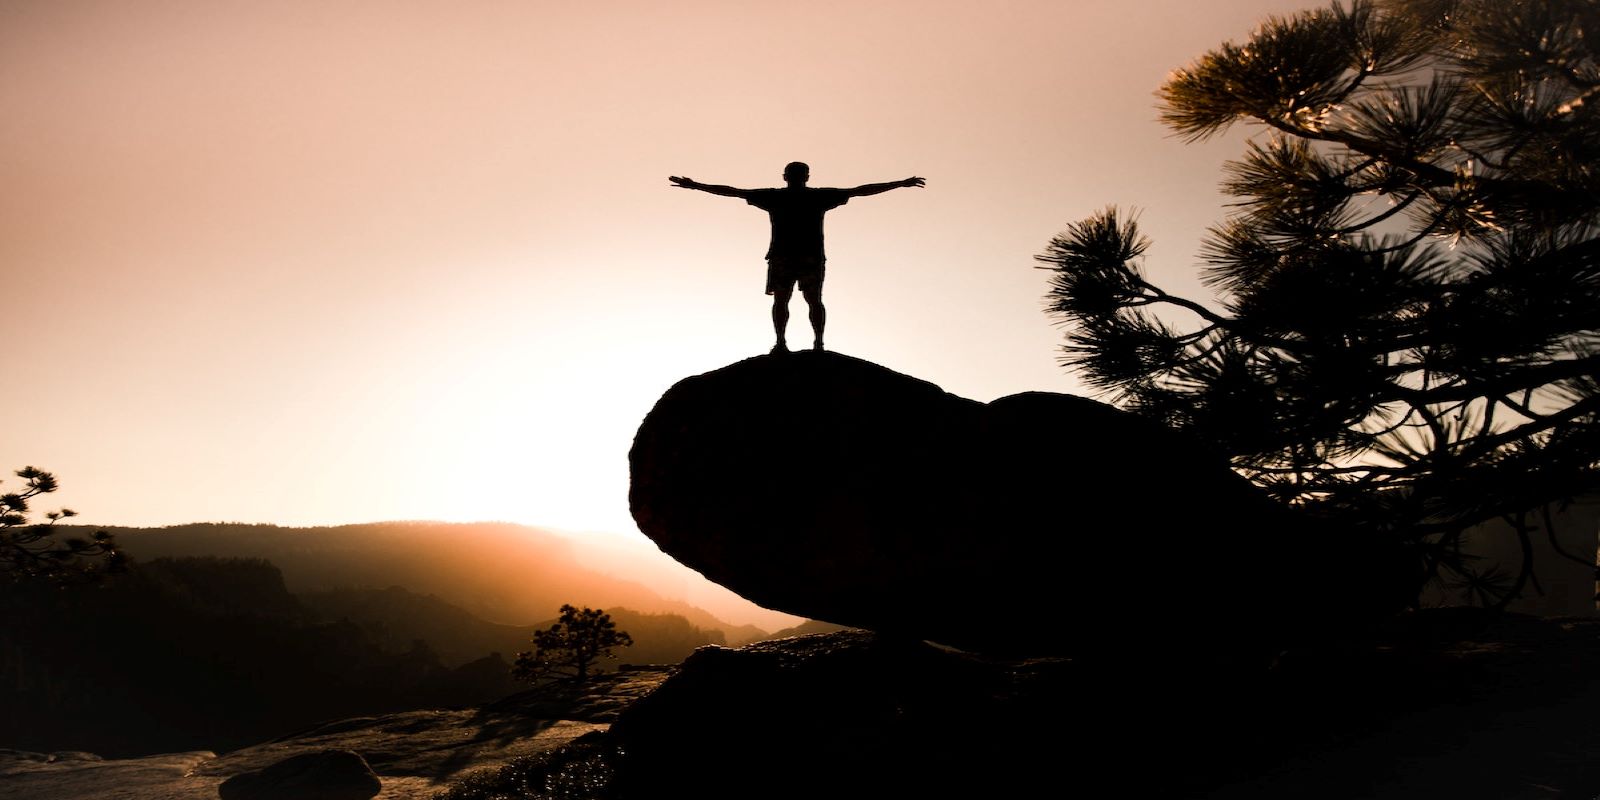 Inspirational Sunrise image of a hiker on a large rock